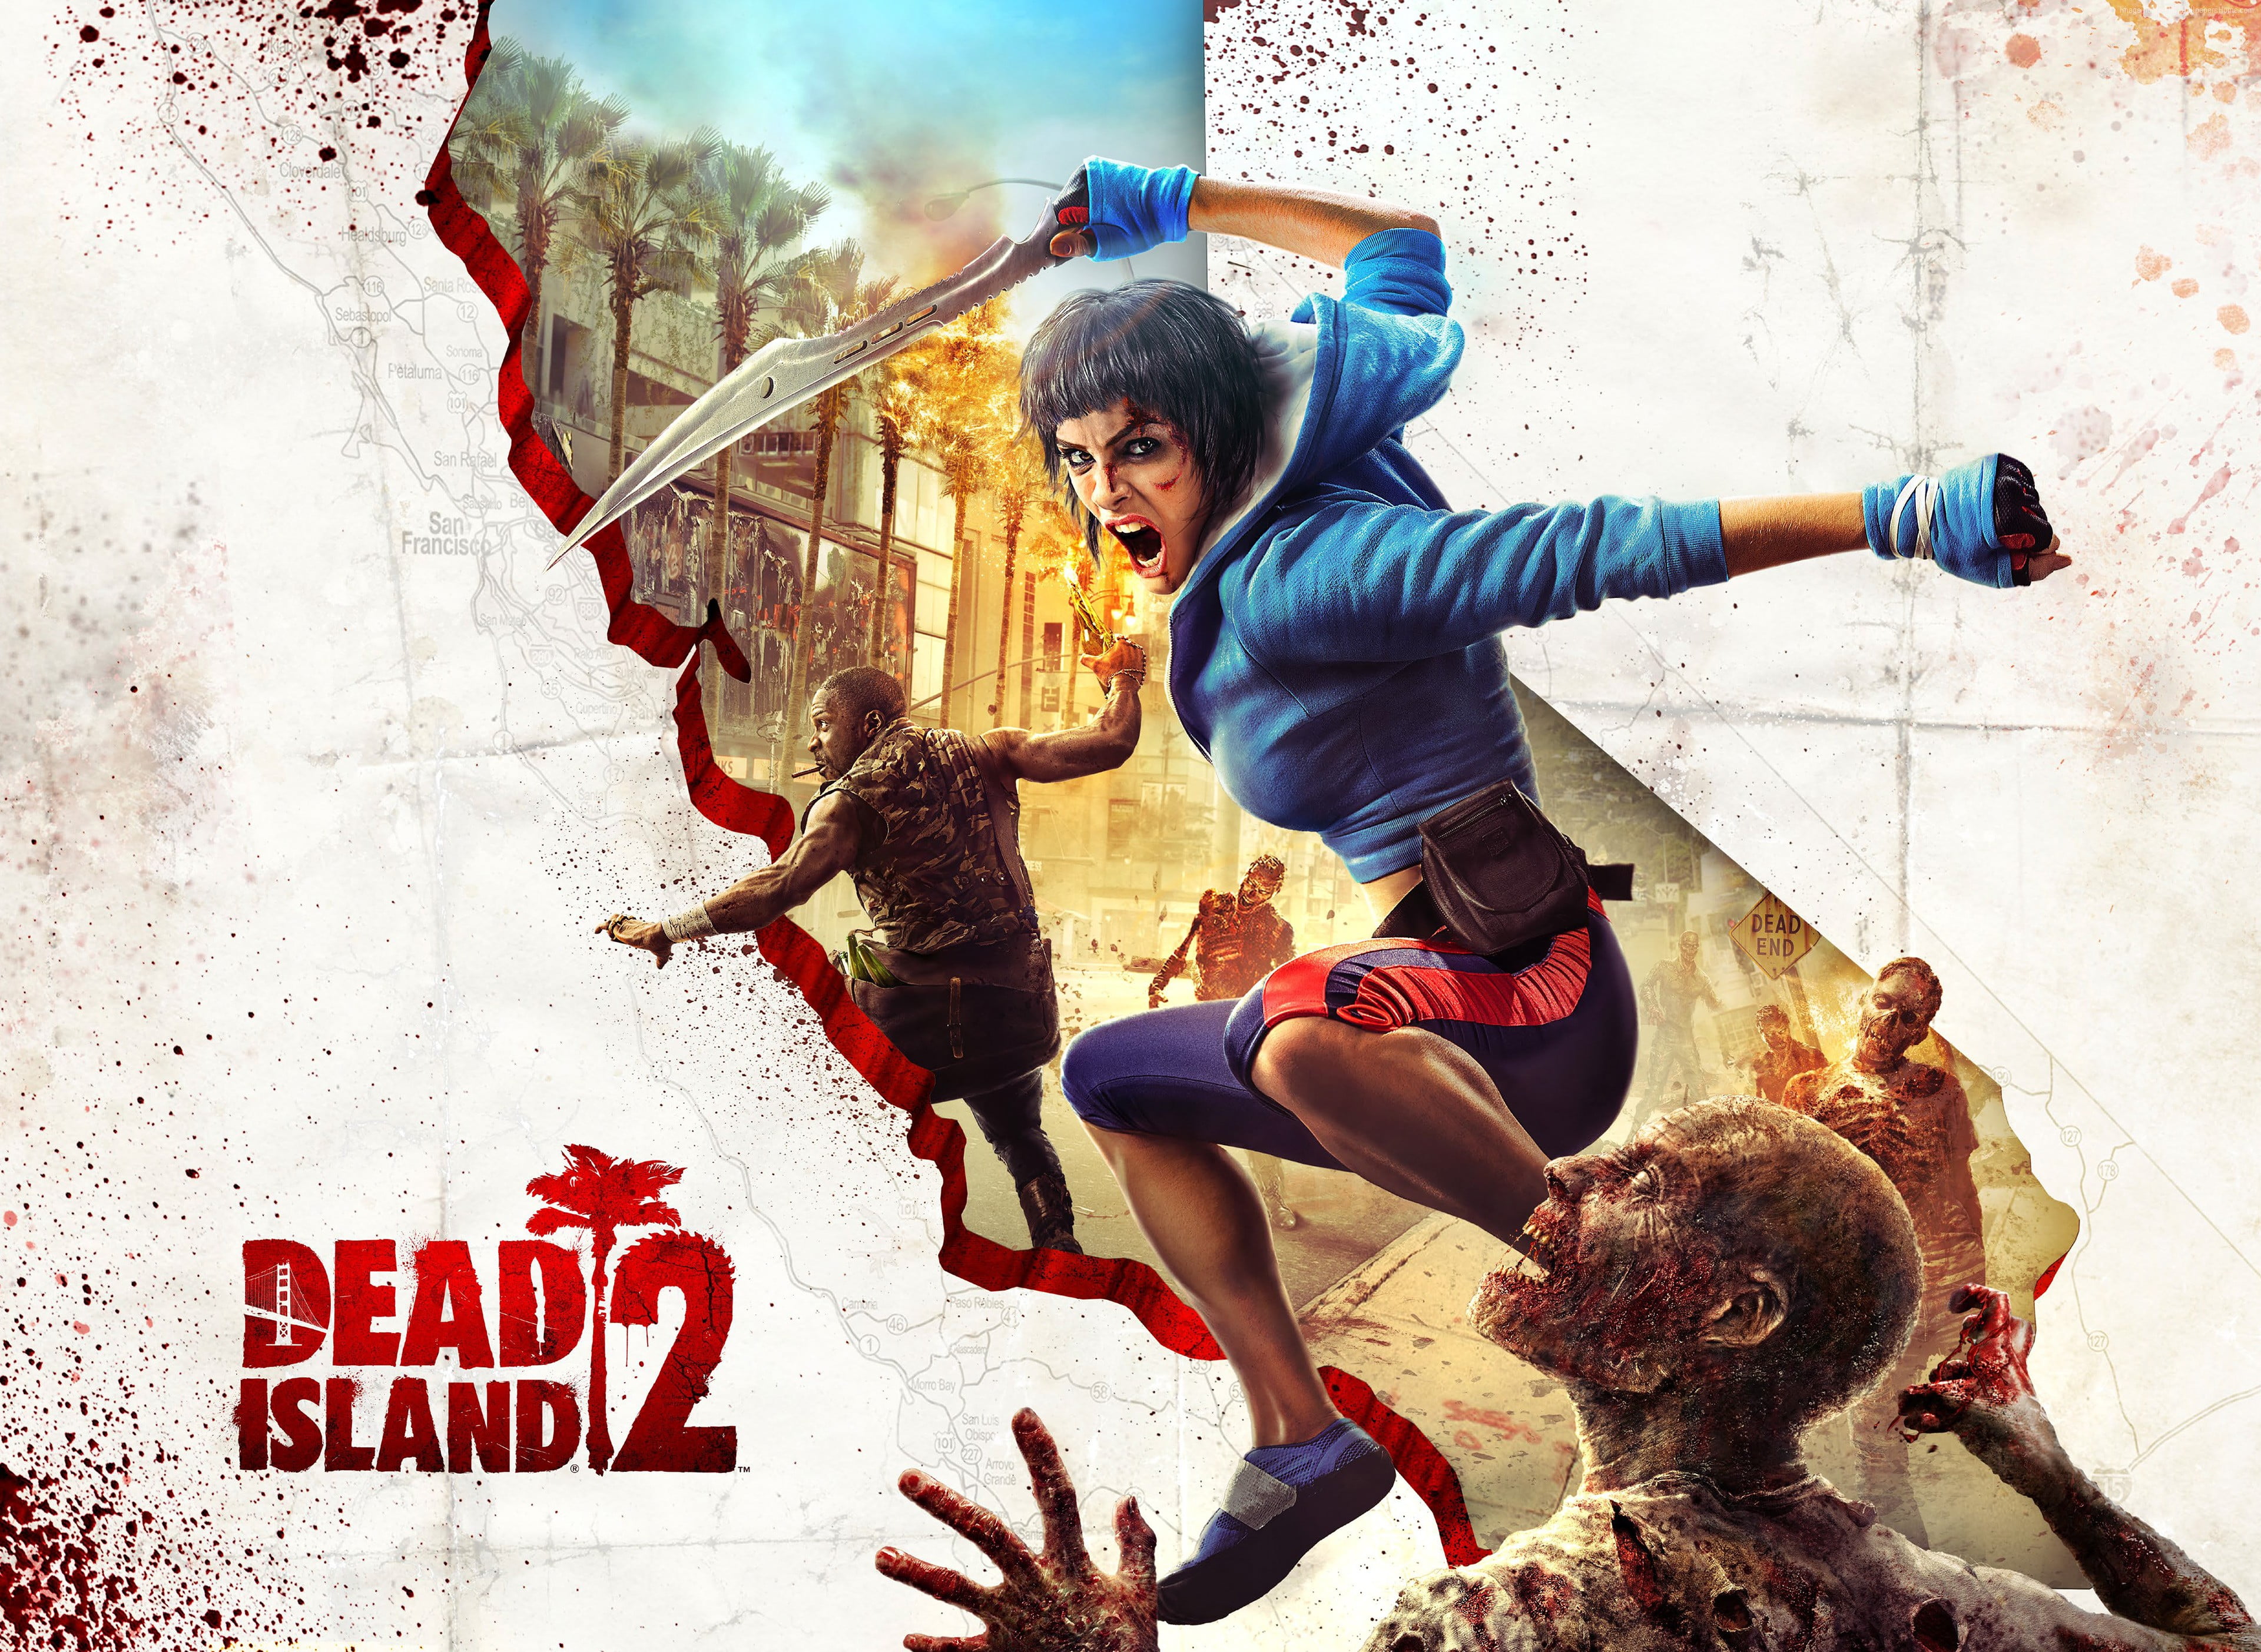 Zastaki.com - Постер ролевой игры  Dead Island 2